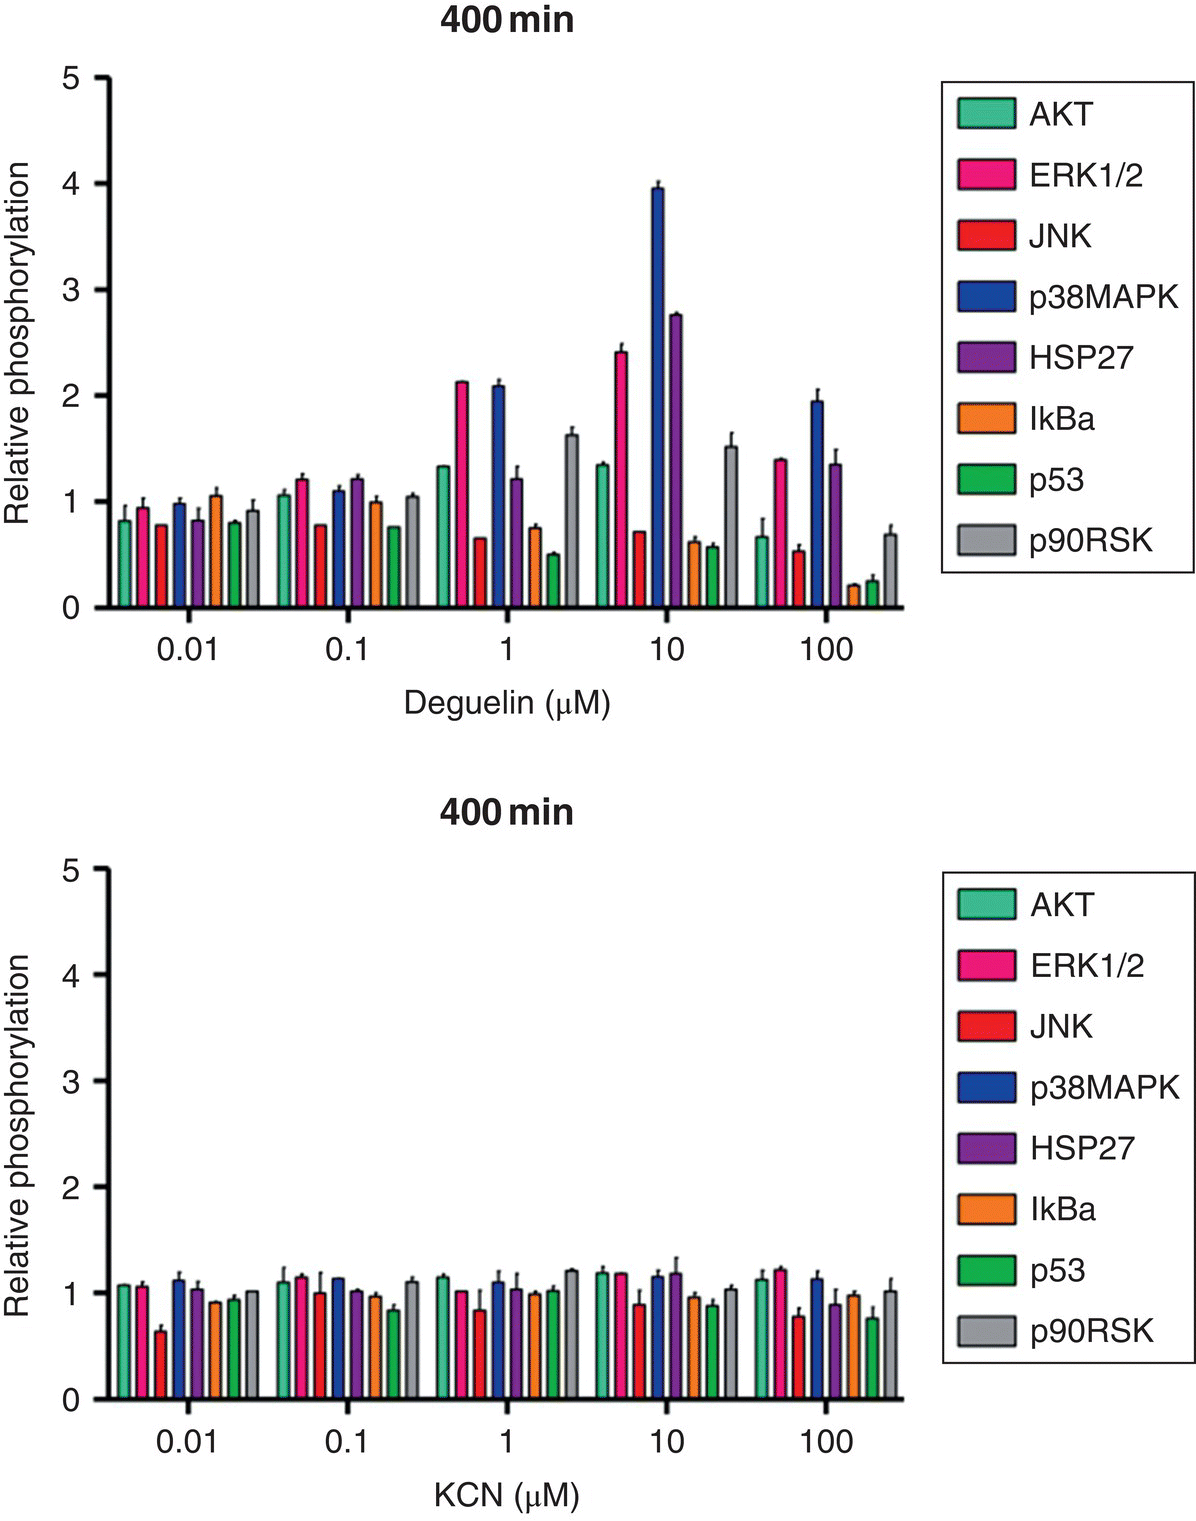 Graphs of relative phosphorylation vs. deguelin (top) and KCN (bottom) depicting bars representing for AKT,ERK1/2, JNK
p38MAPK, HSP27, IkBa, p53, and p90RSK.